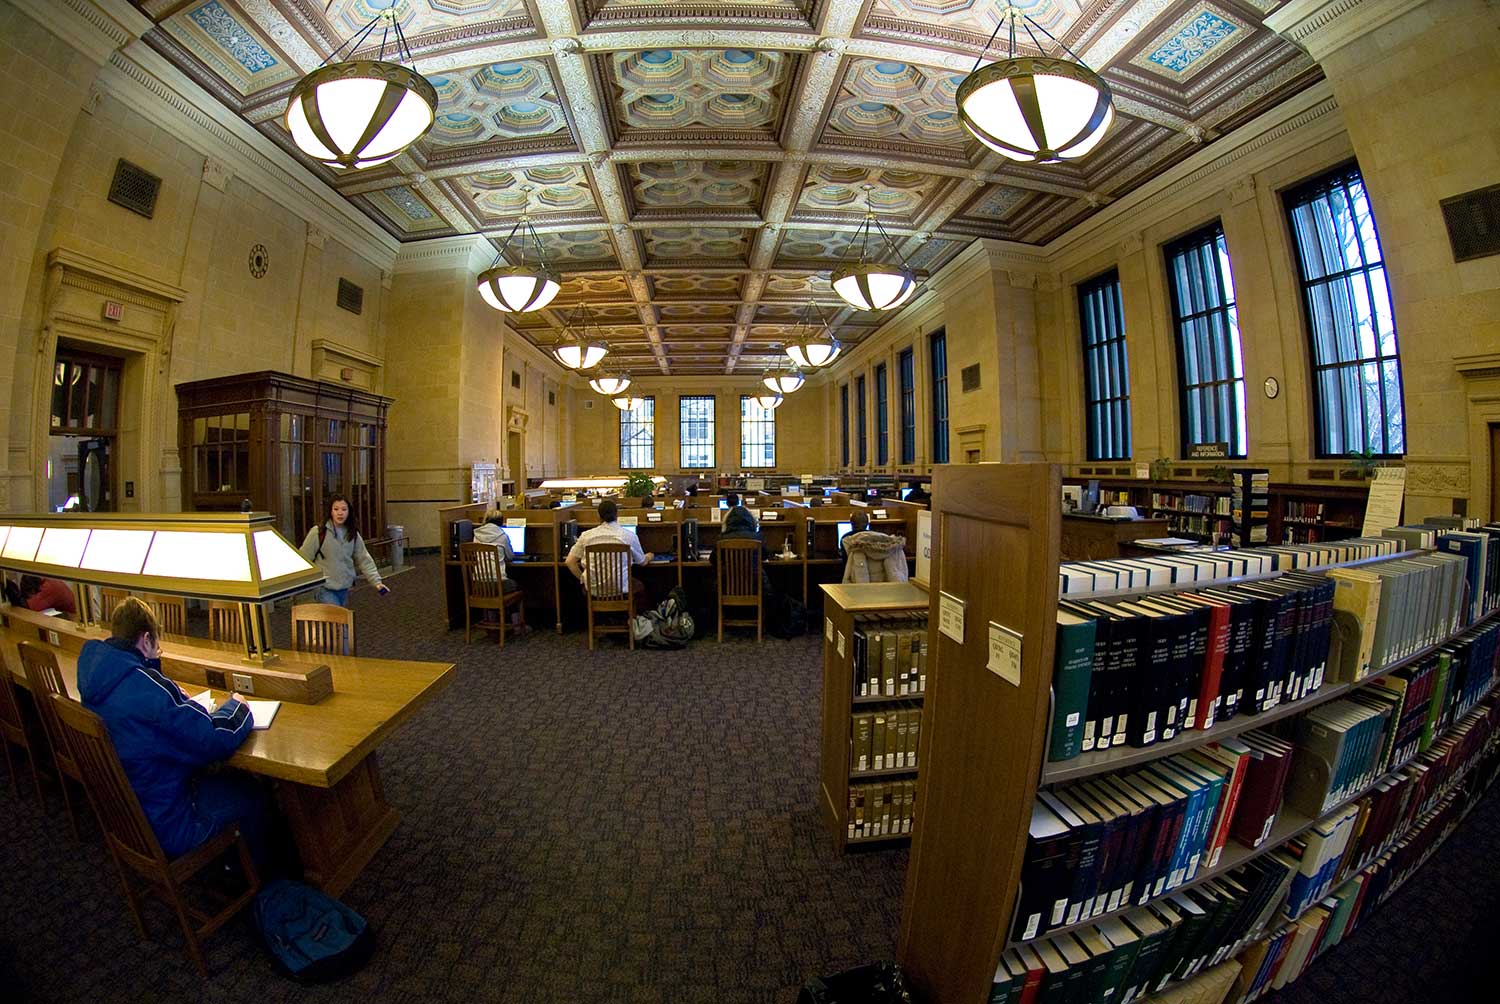 Walter Library Room 206